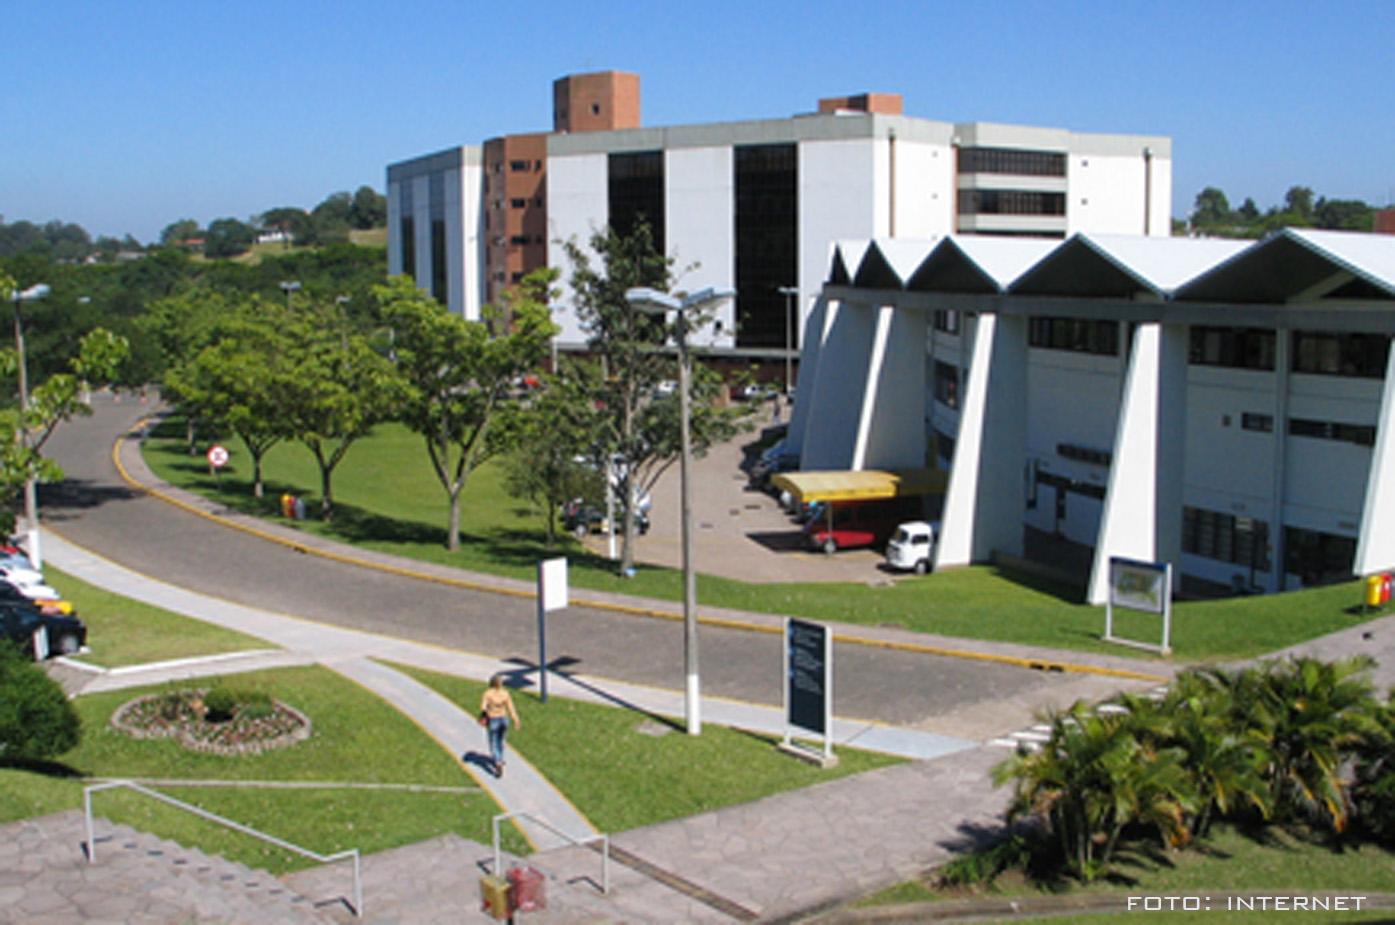 Biblioteca UNISINOS, San Leopoldo-Rio Grande do Sul- Brasil / UNISINOS Library, San Leopoldo.